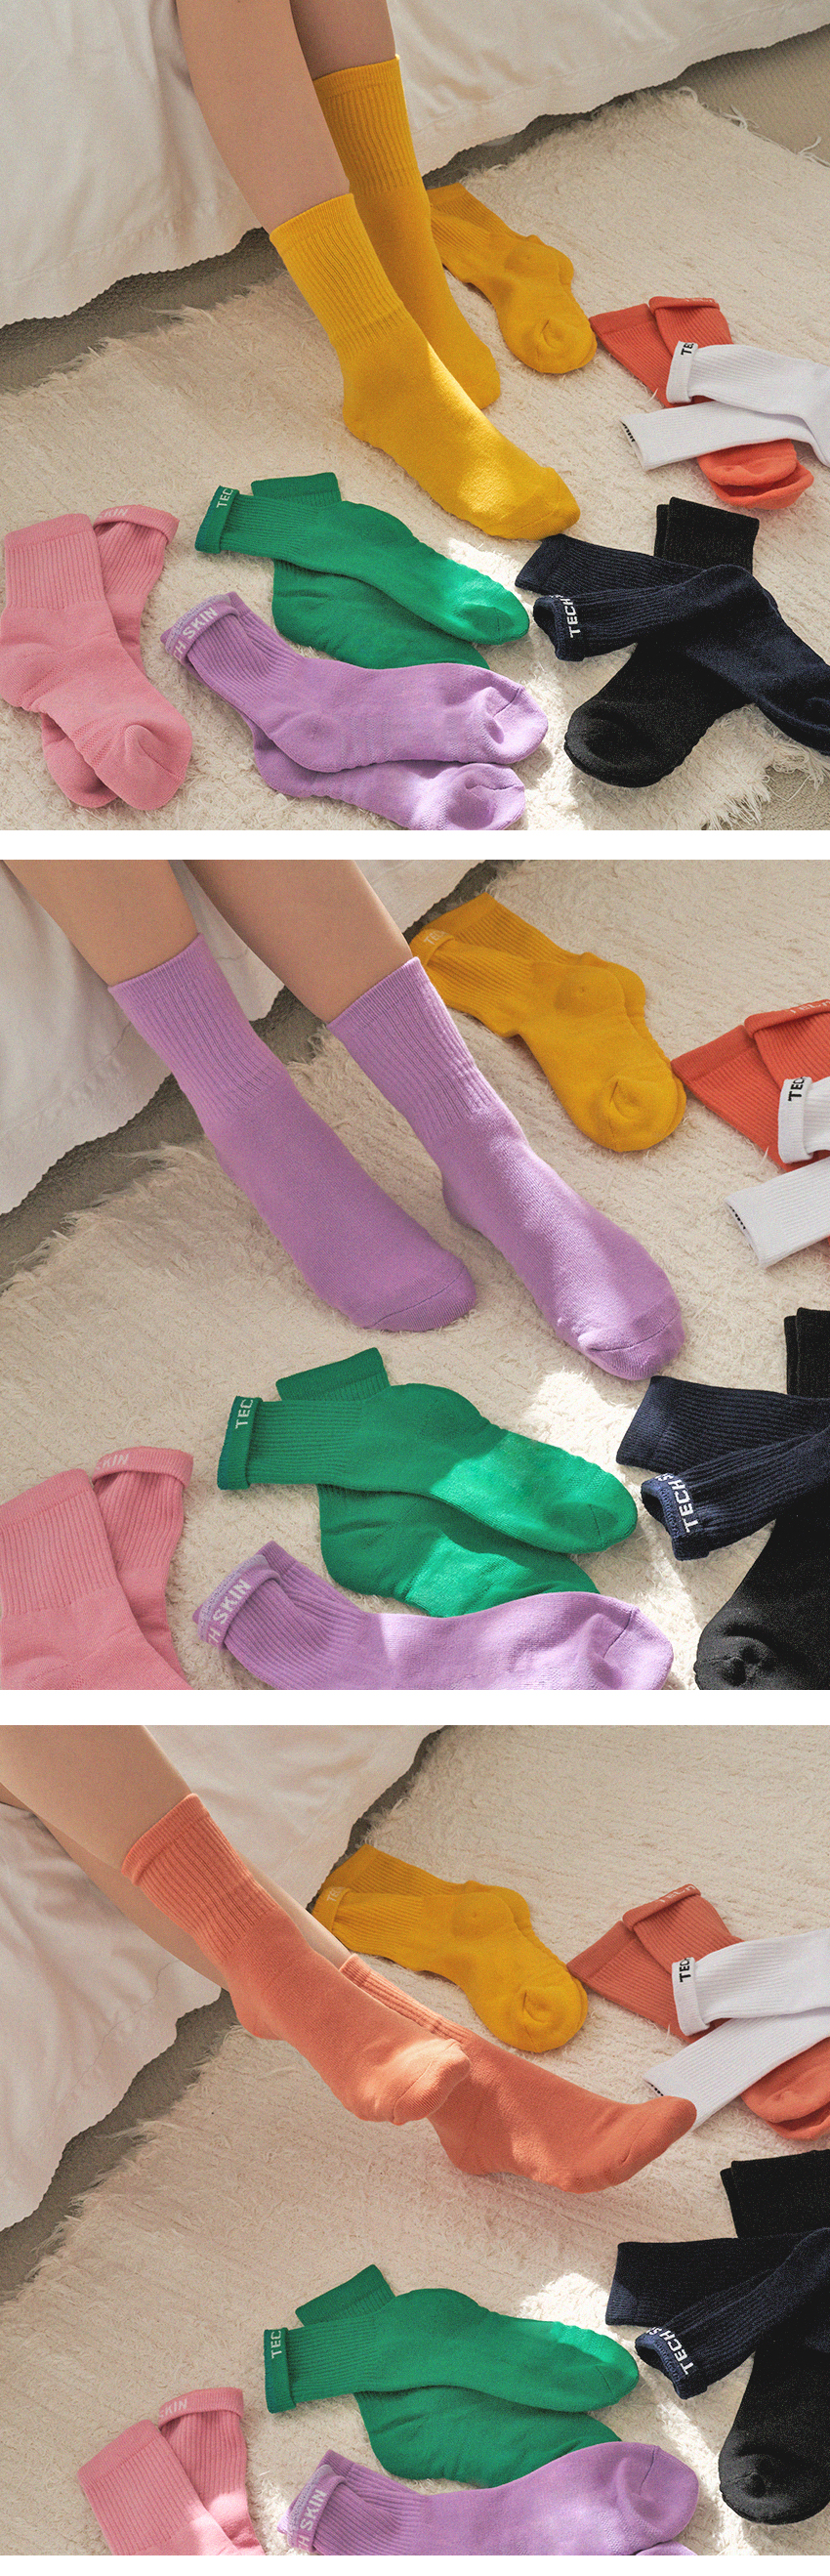 techskin_color_collection_socks2_01.jpg